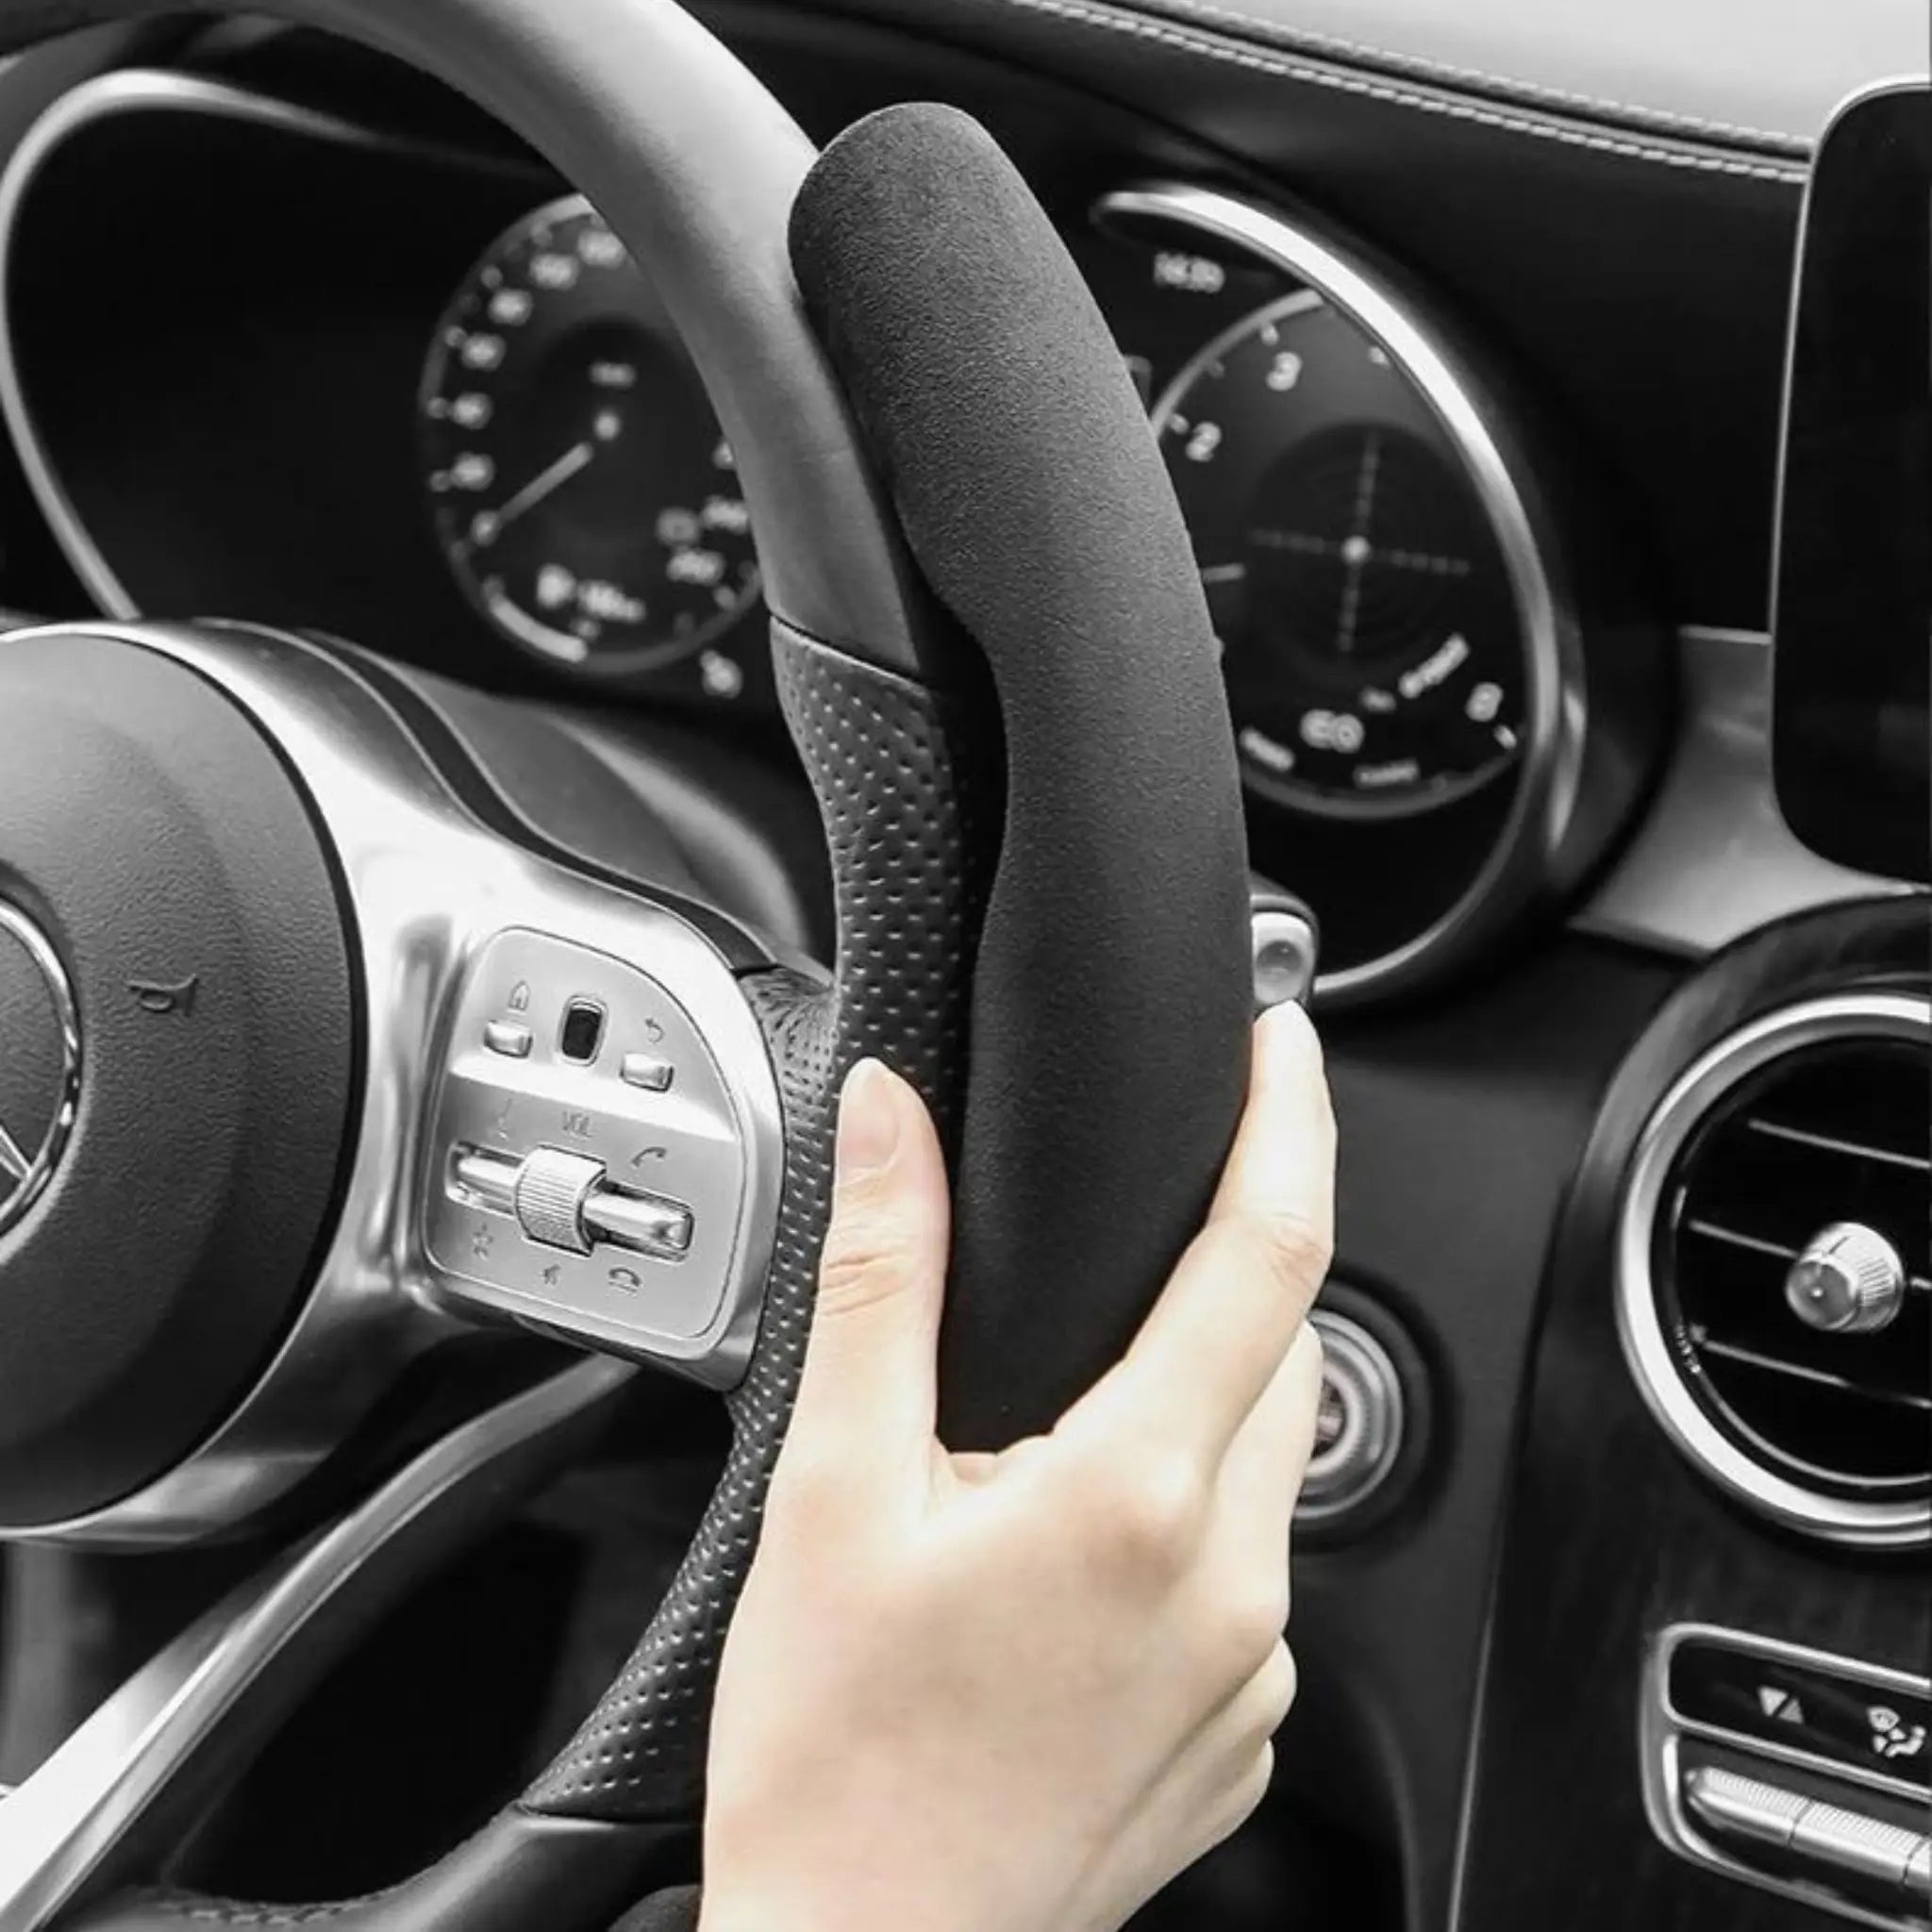 NEW Luxus Suede Minimalist Steering Wheel Cover